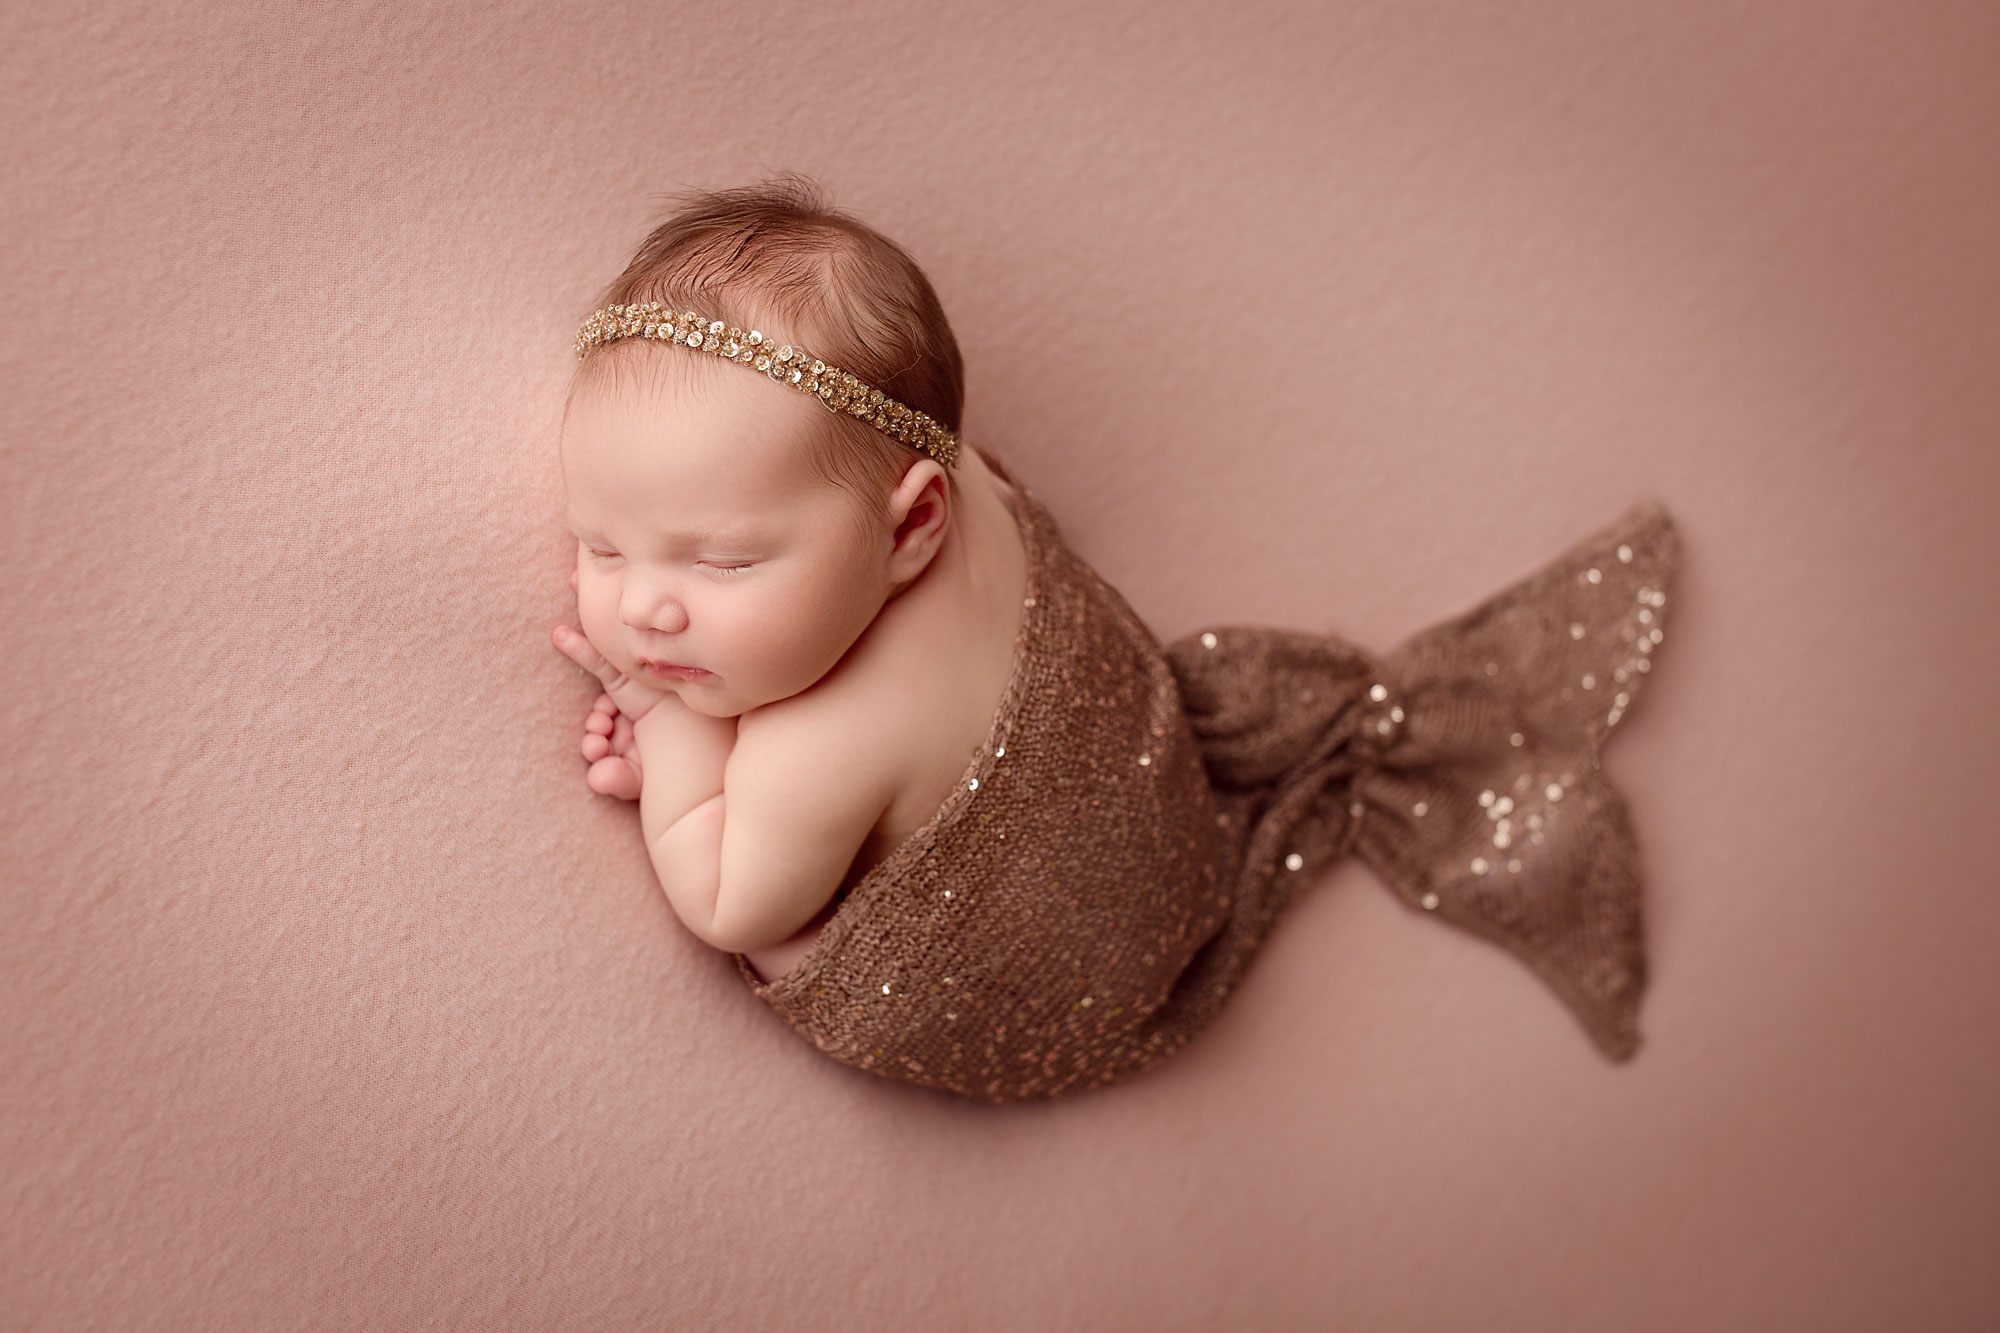 mermaid theme baby photos, newborn girl in sparkly mermaid tail and headband